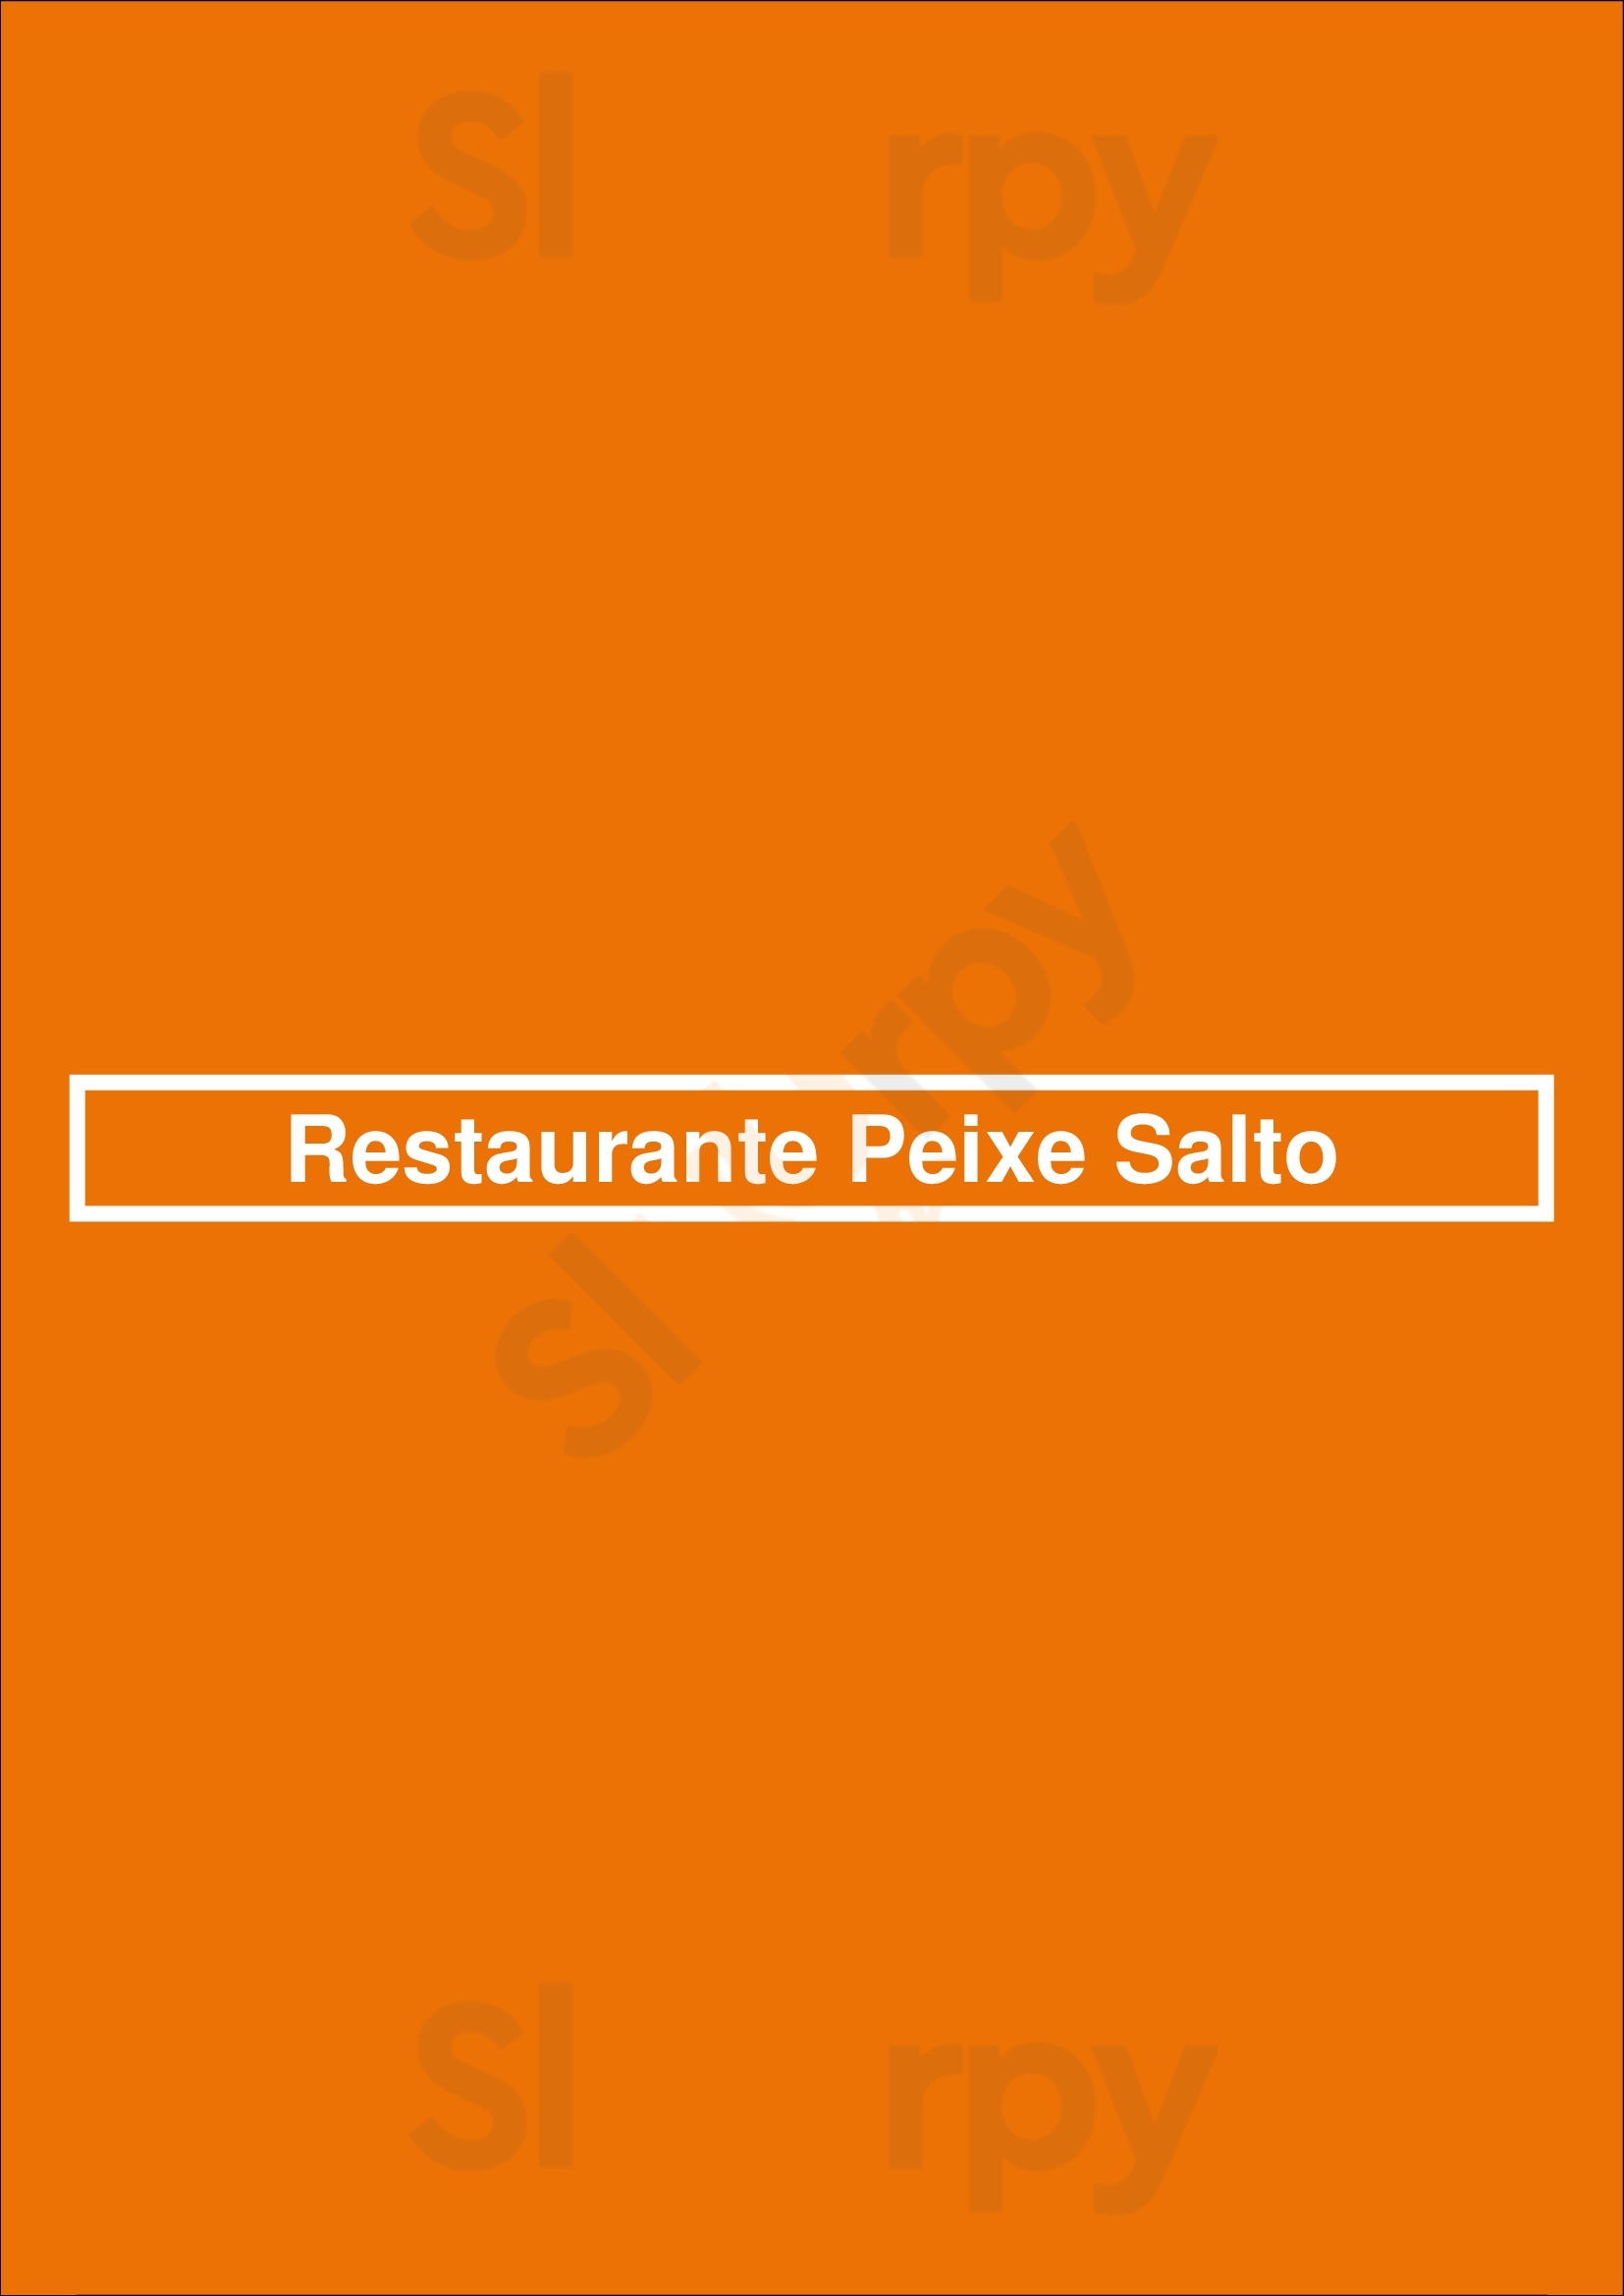 Restaurante Peixe Salto Cascais Menu - 1